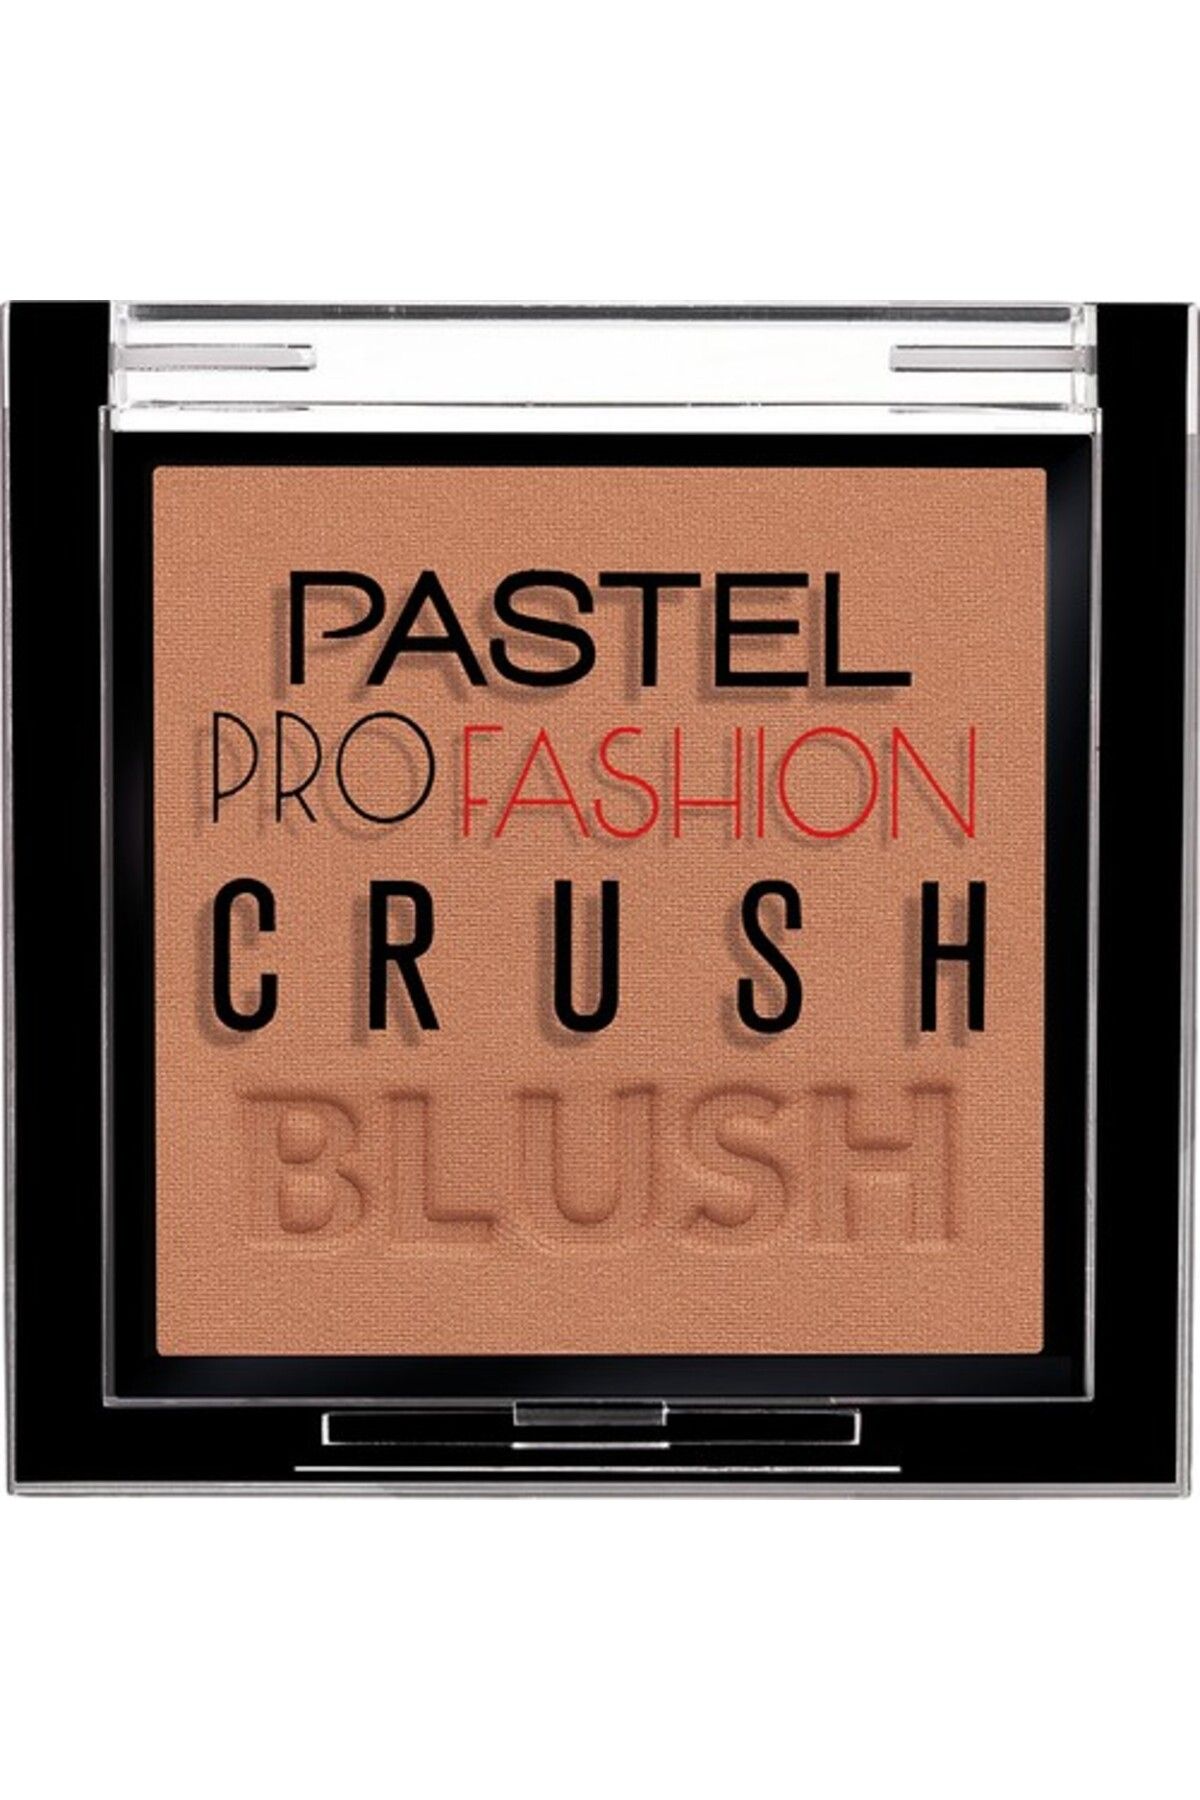 Pastel Crush Blush - Allık 307